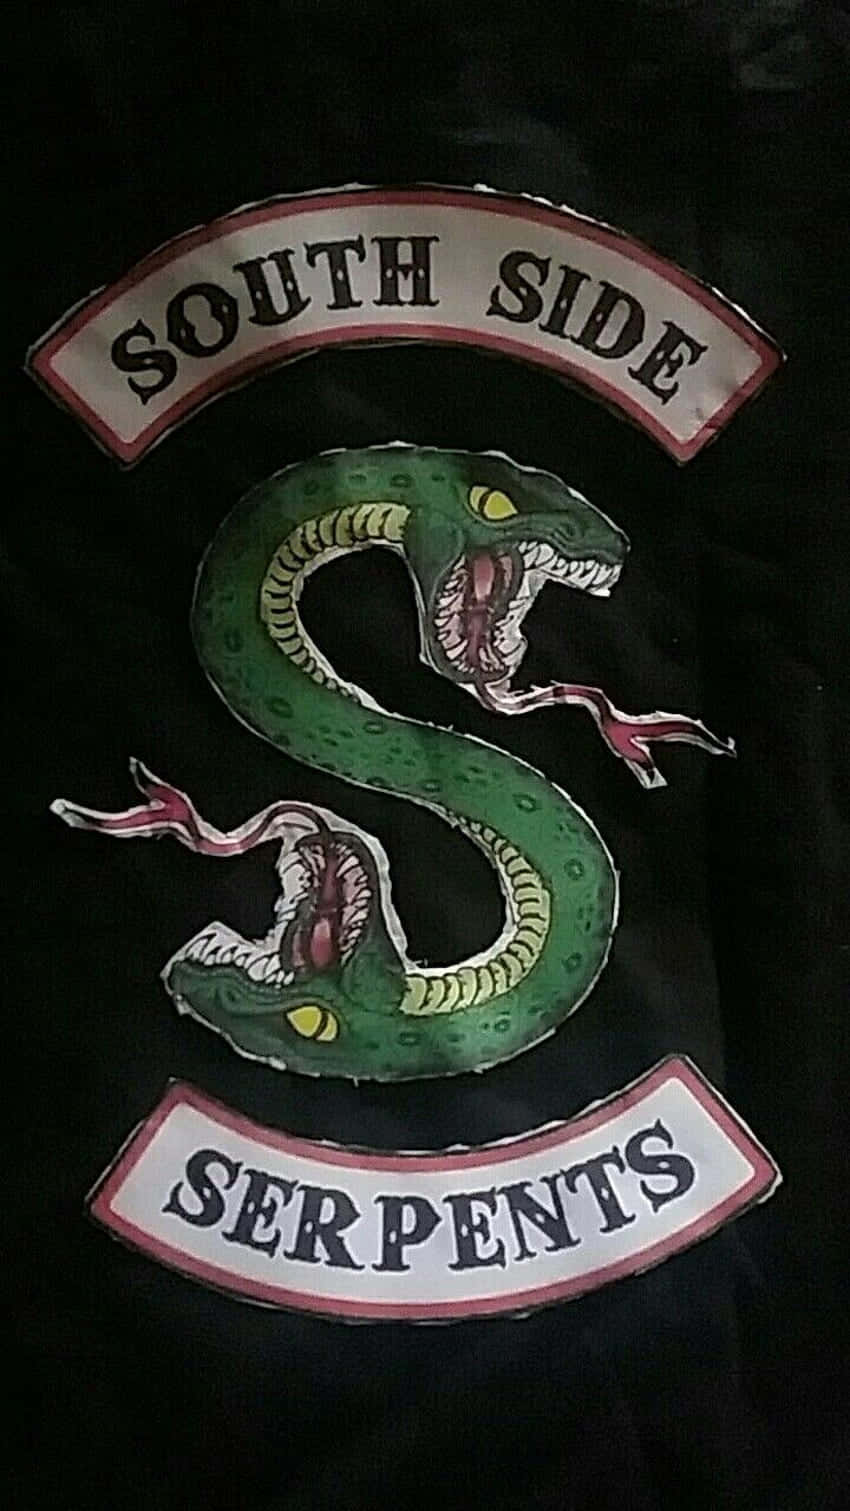 The Southside Serpents, a diverse gang of street toughs. Wallpaper